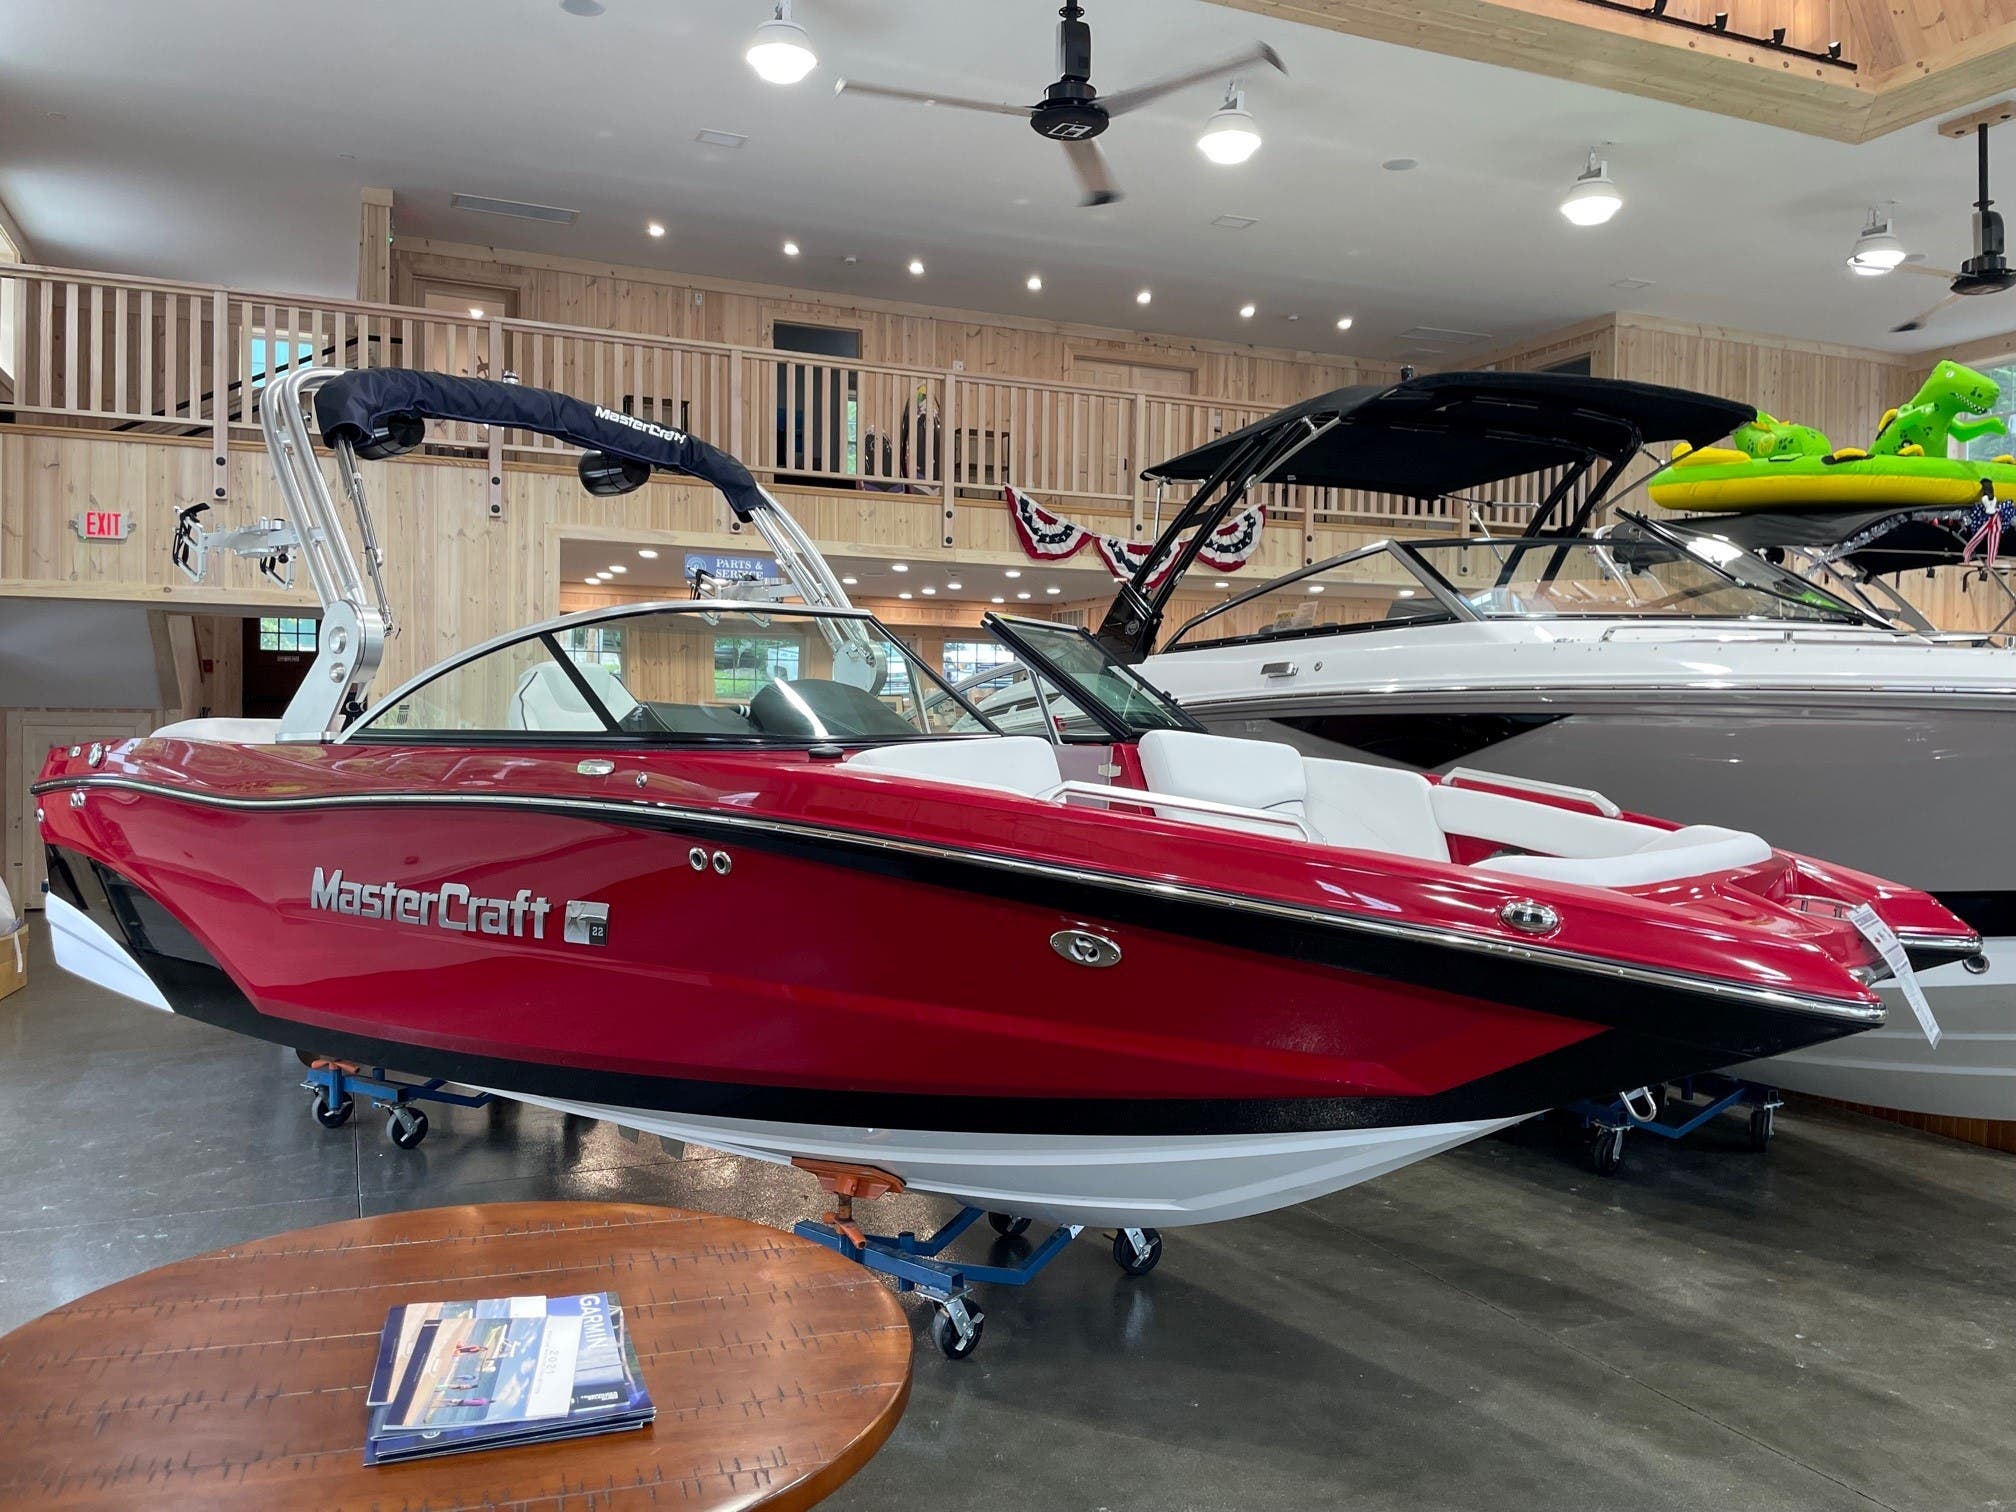 Mastercraft Xt22 boats for sale